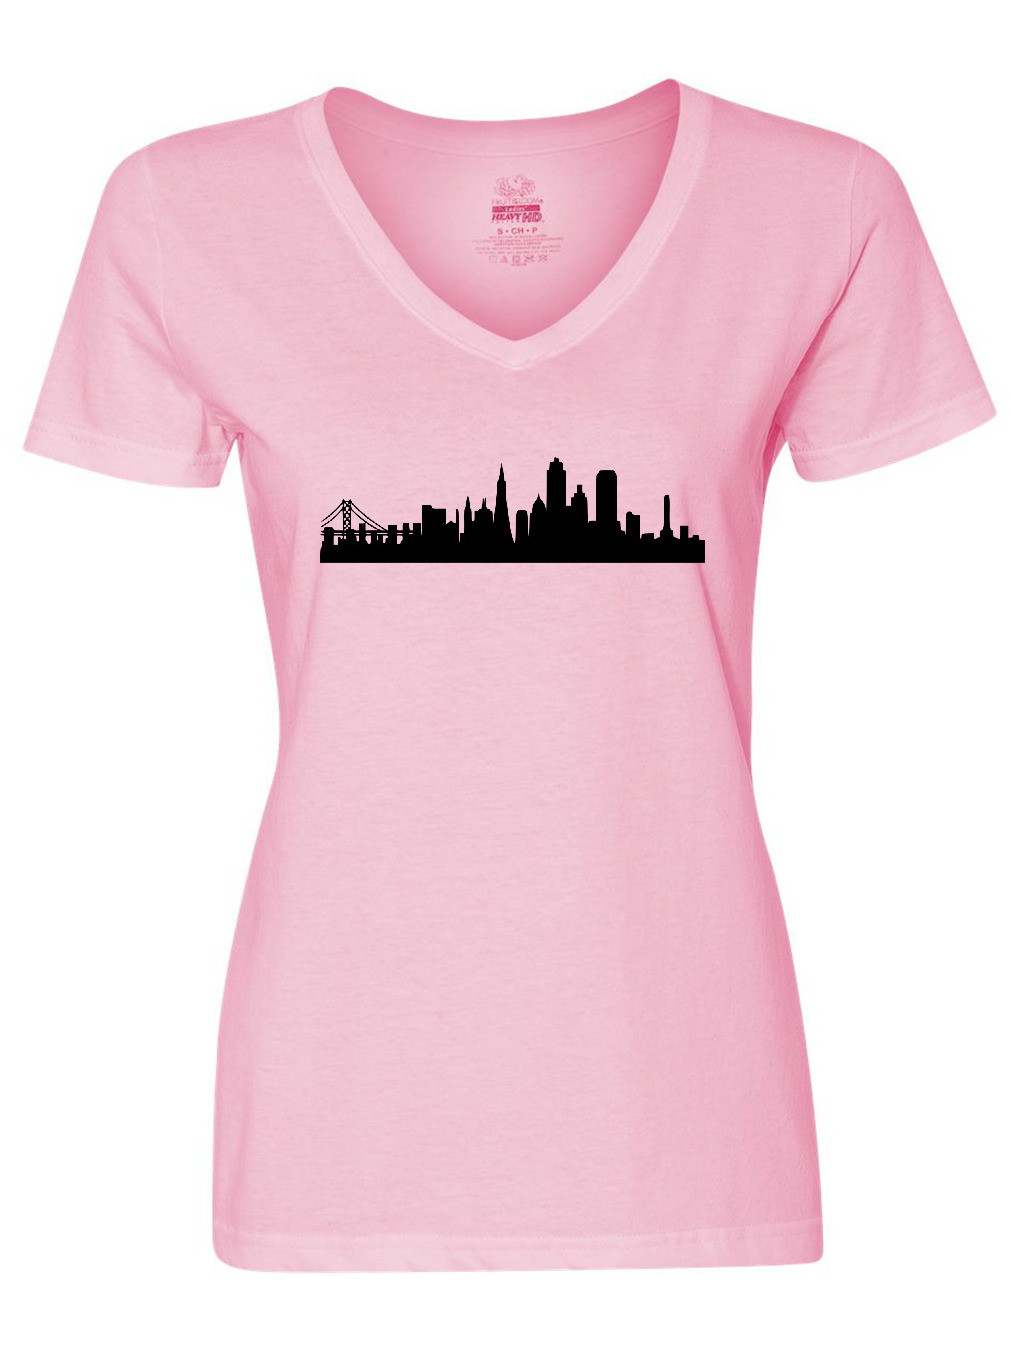 Inktastic San Francisco Skyline Women's V-Neck T-Shirt - image 1 of 4